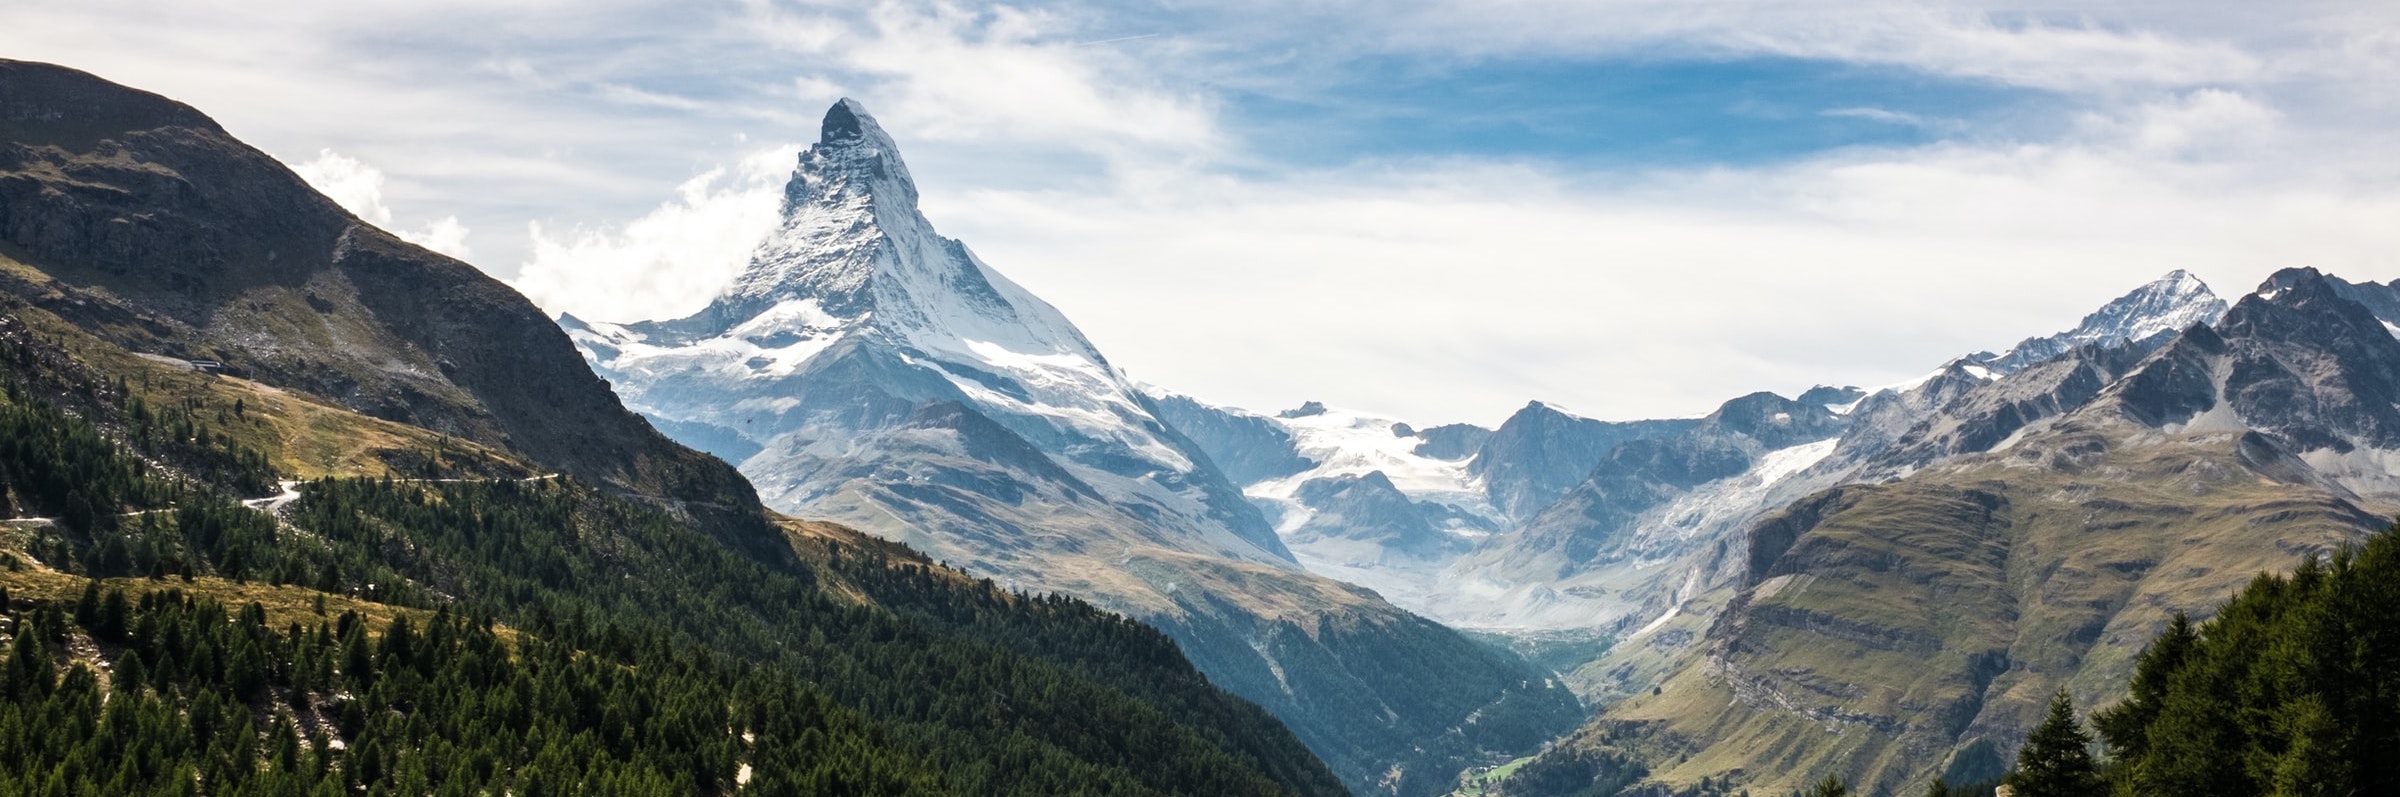 Switzerland - Zermatt